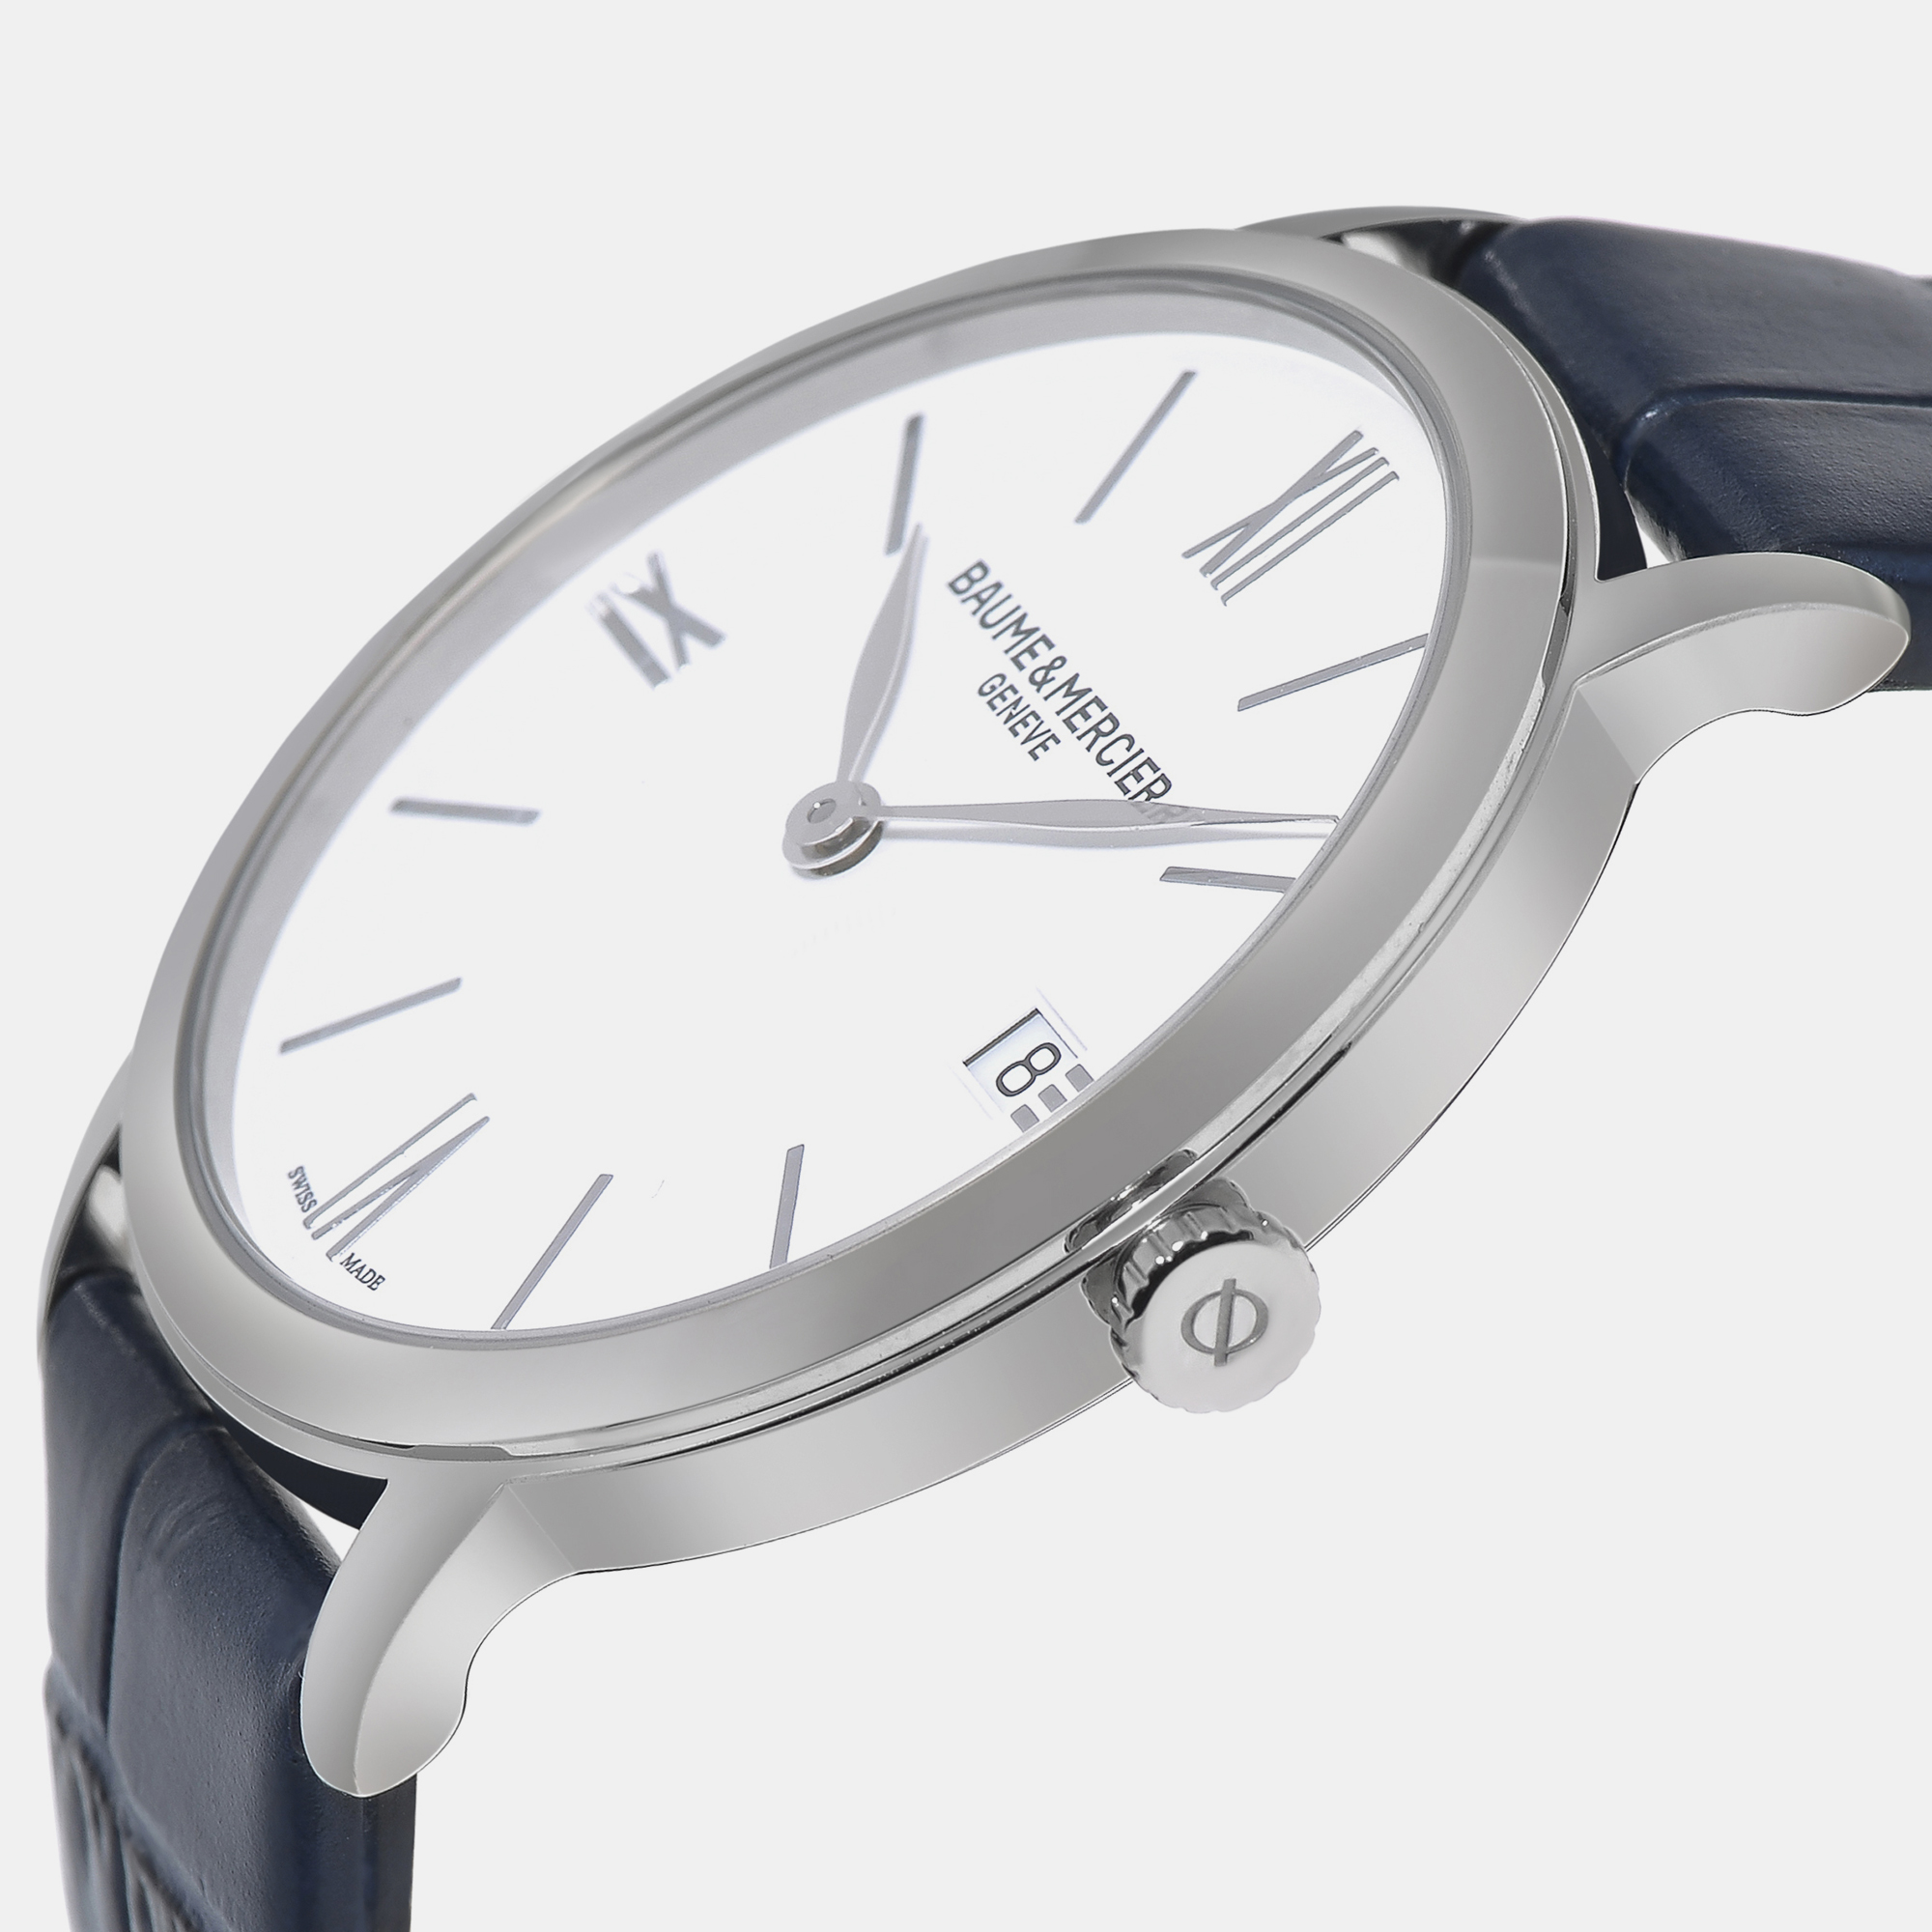 

Baume & Mercier Classima Date Stainless Steel Quartz Women's Watch, White